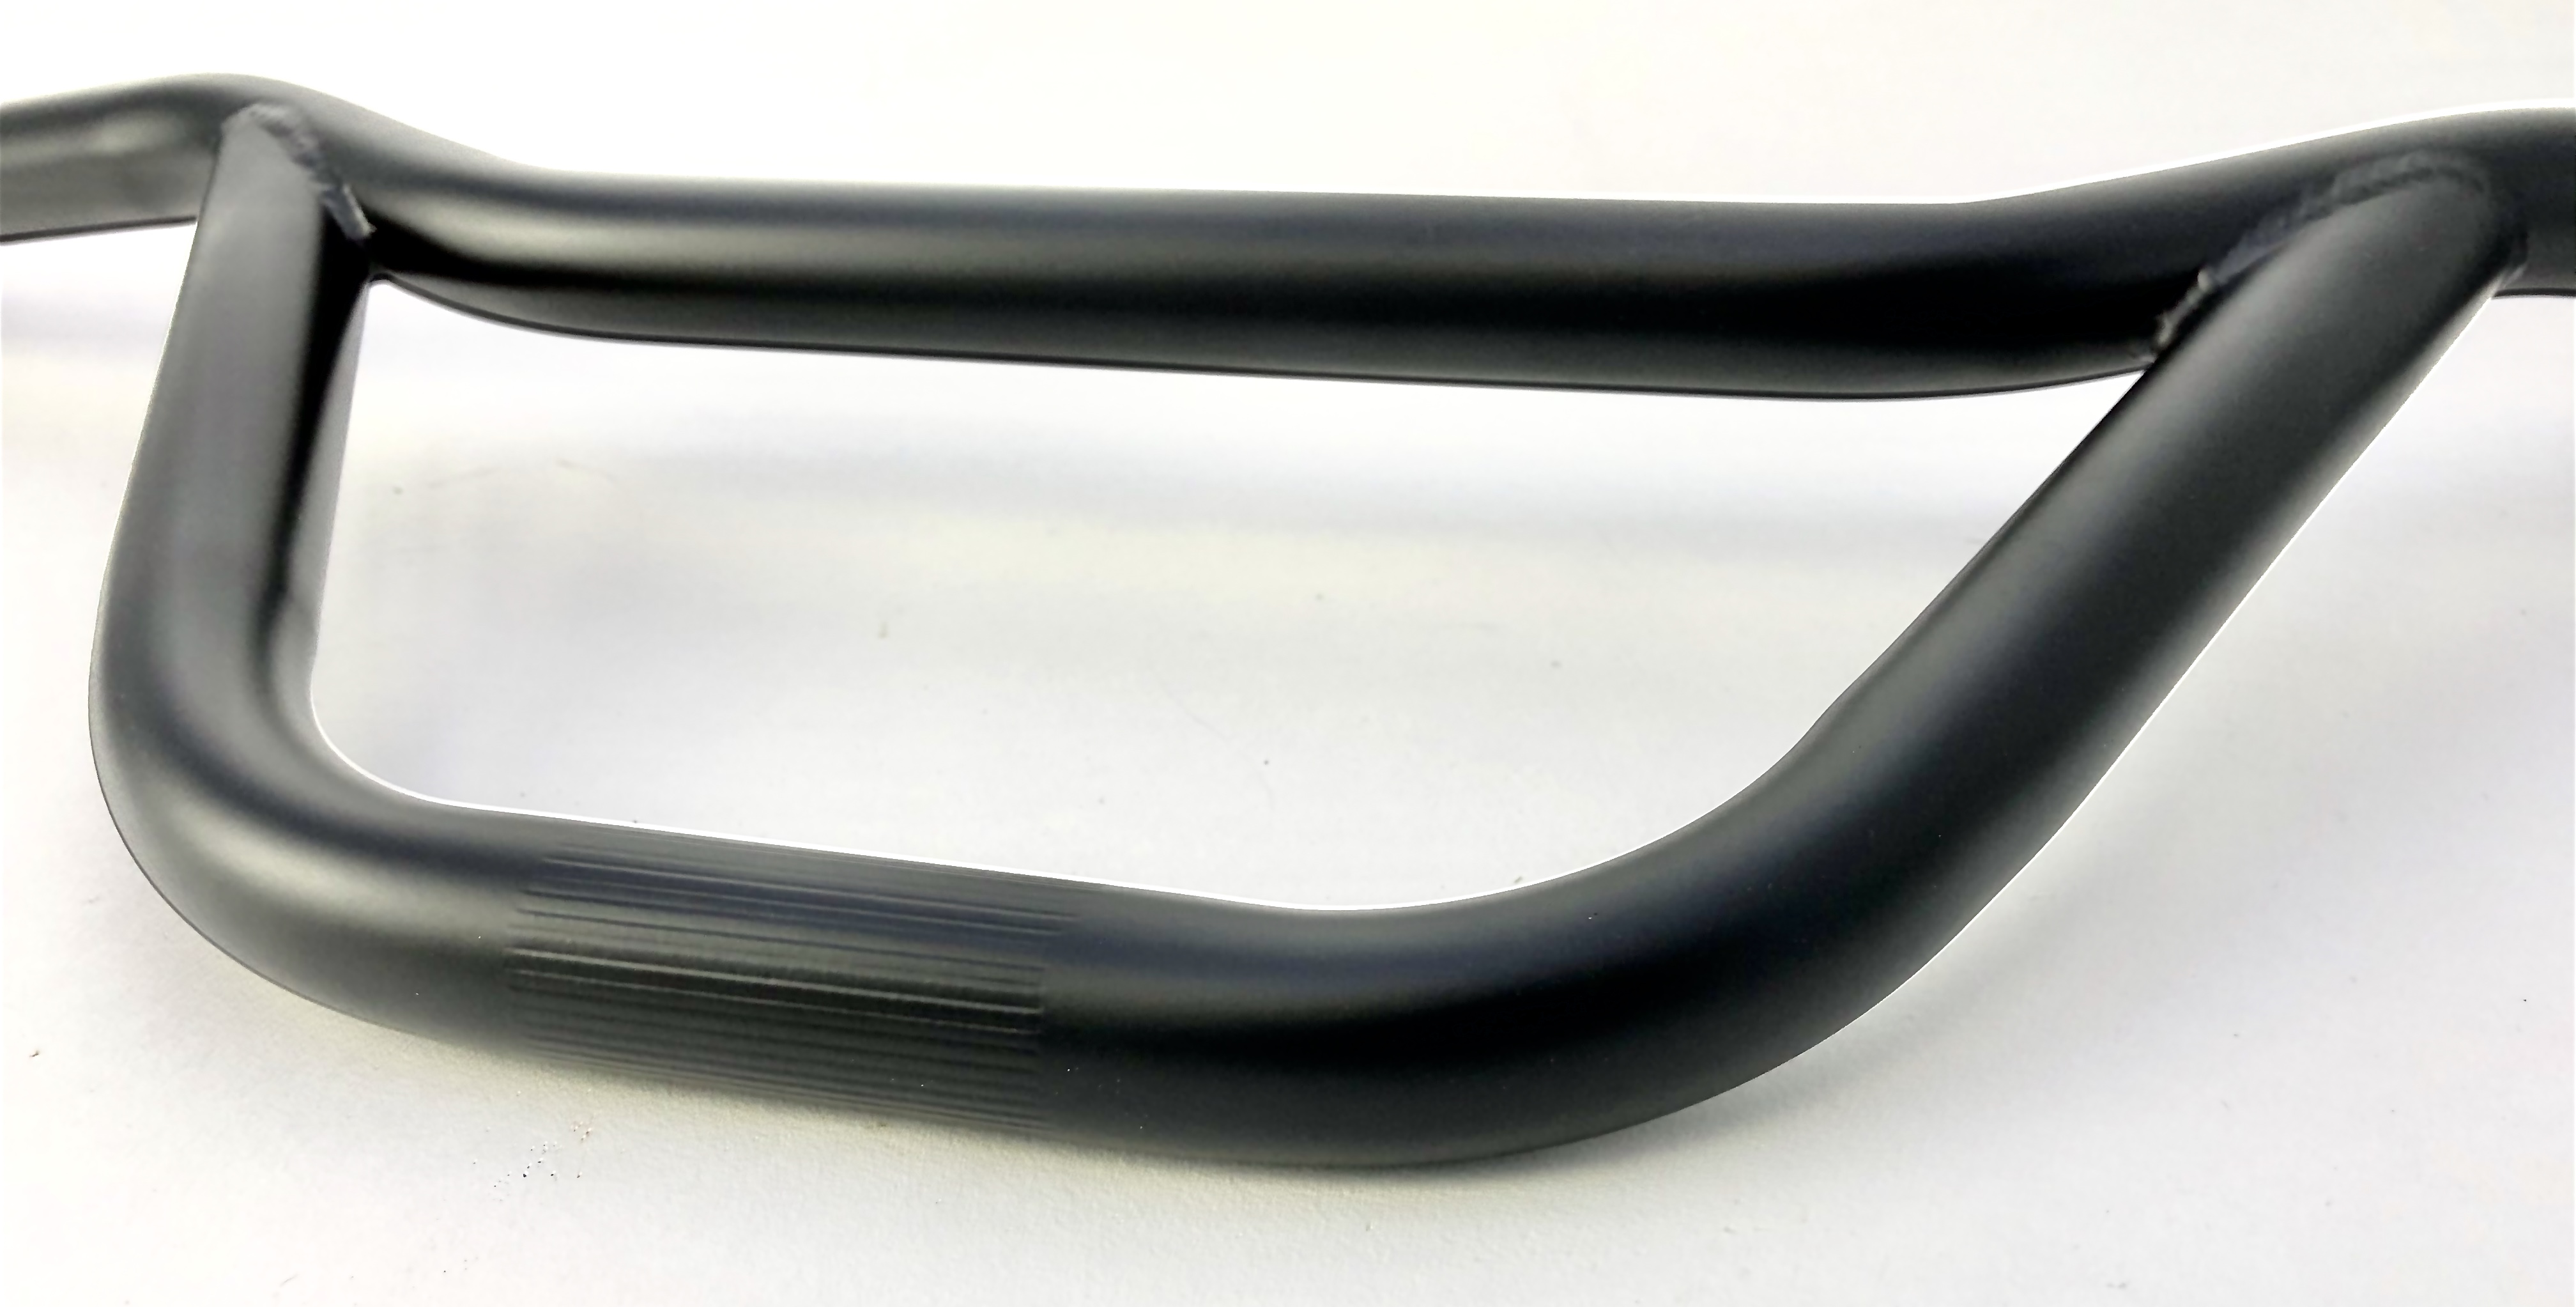 Flat Cross - wide and flat handle bar  in BMX shape black matte